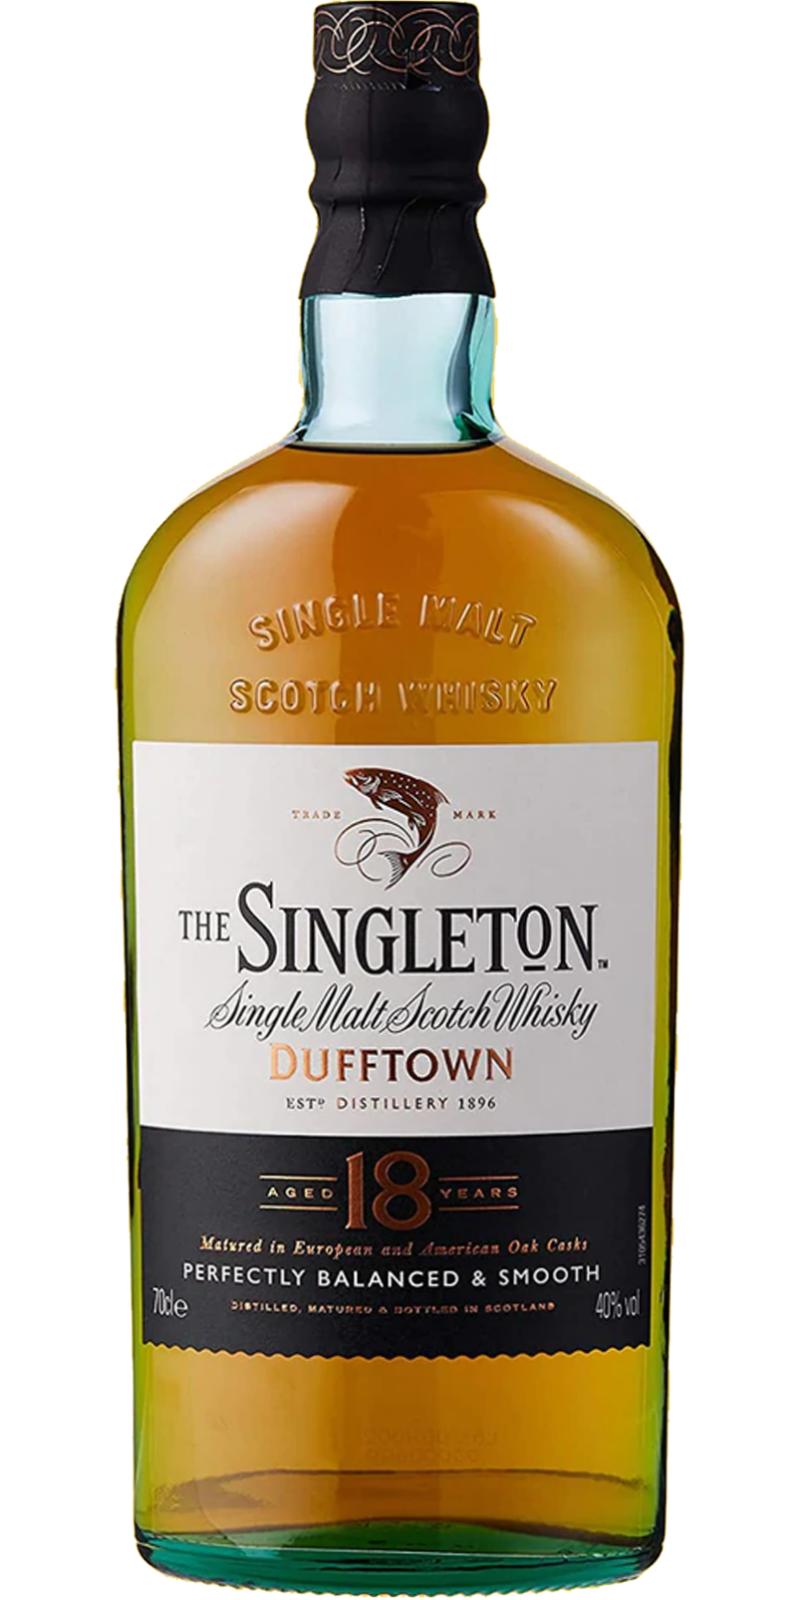 The Singleton of Dufftown 18yo Perfectly Balanced & Smooth European and American Oak Casks 40% 700ml